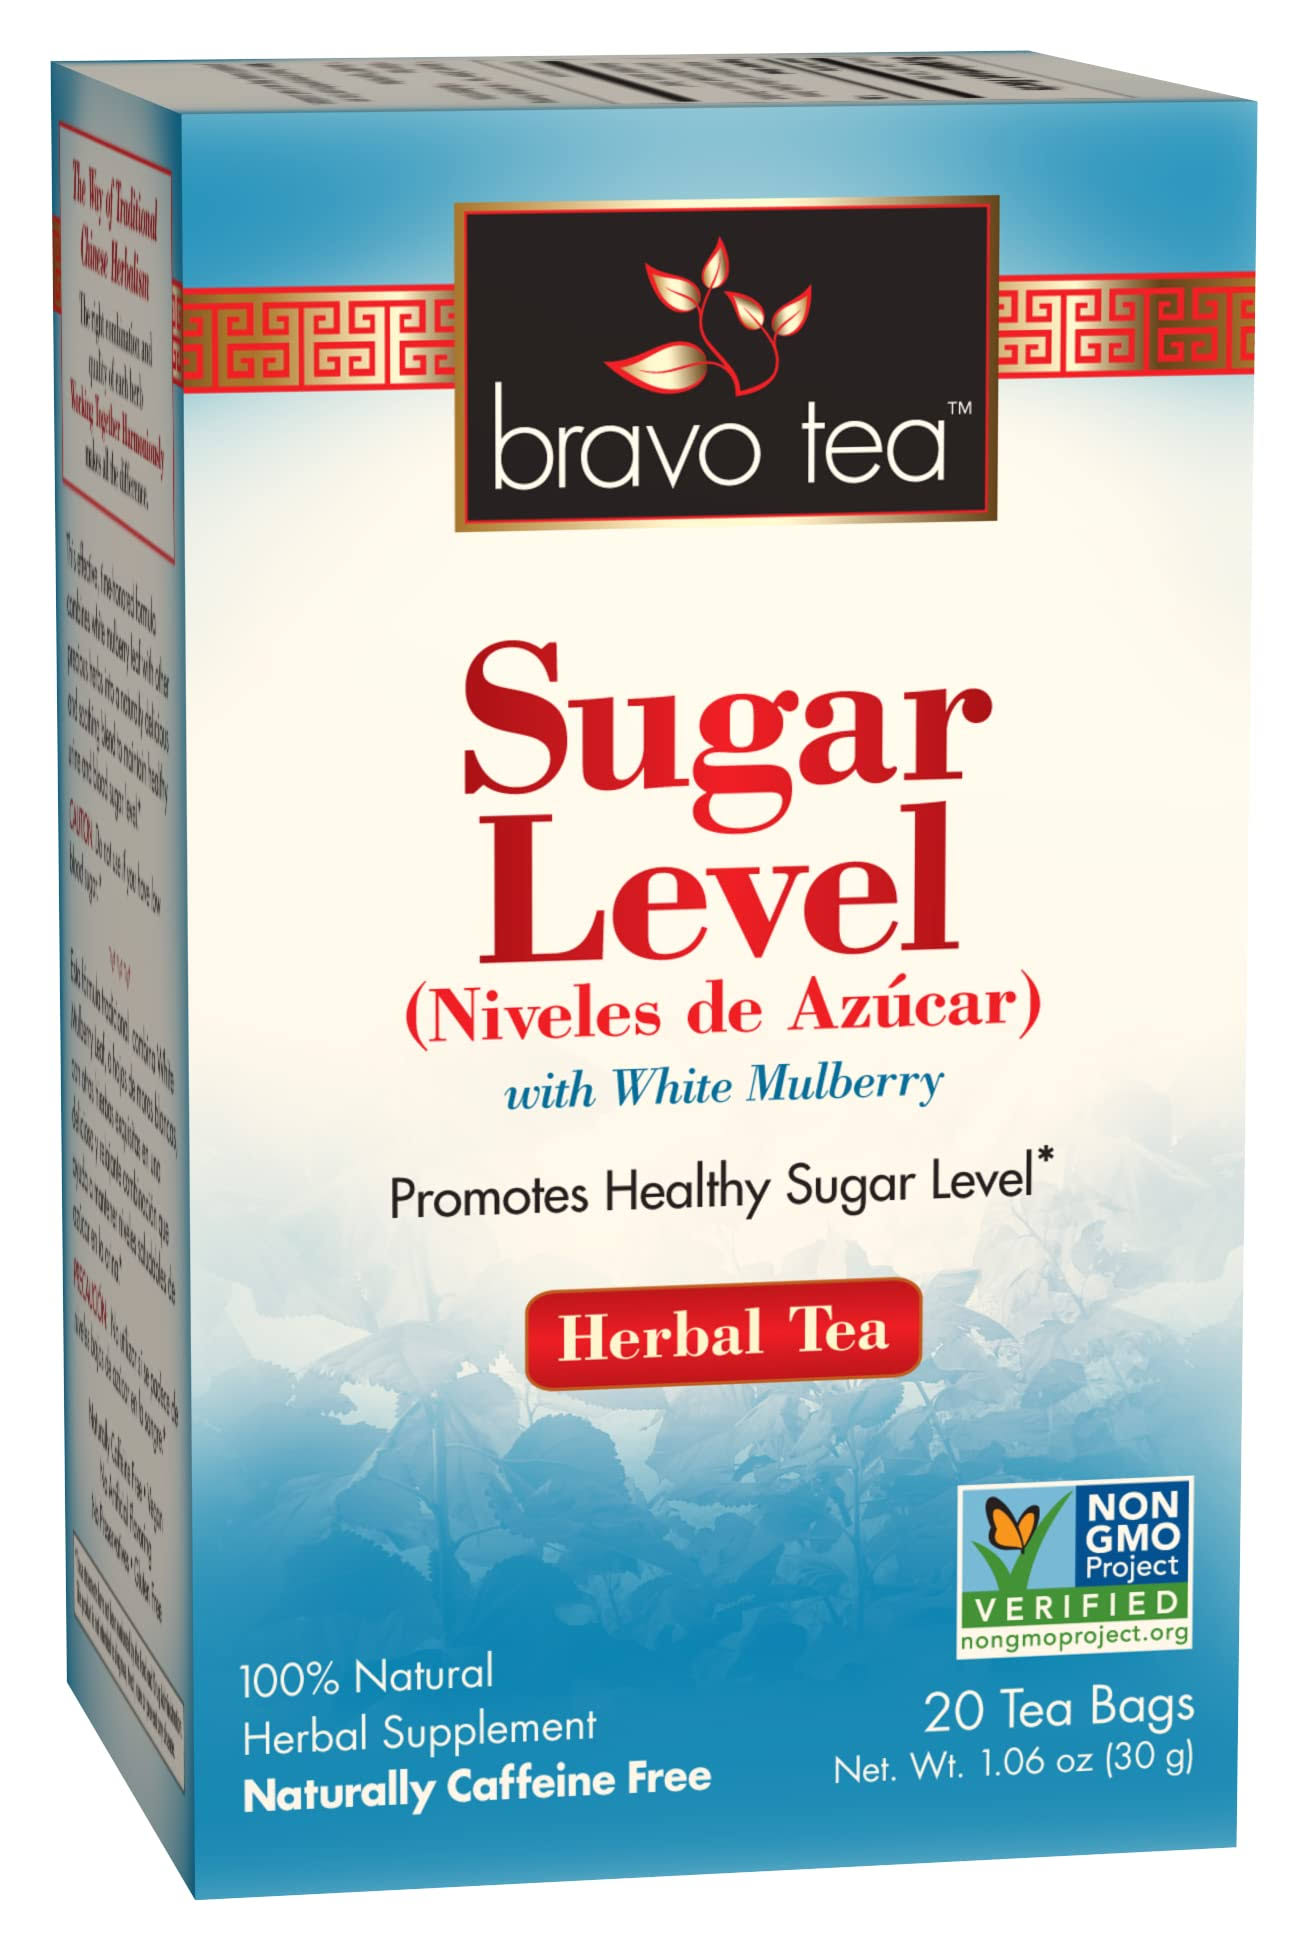 Bravo Tea Sugar Level Herbal Tea - 20 Tea Bags, 30g